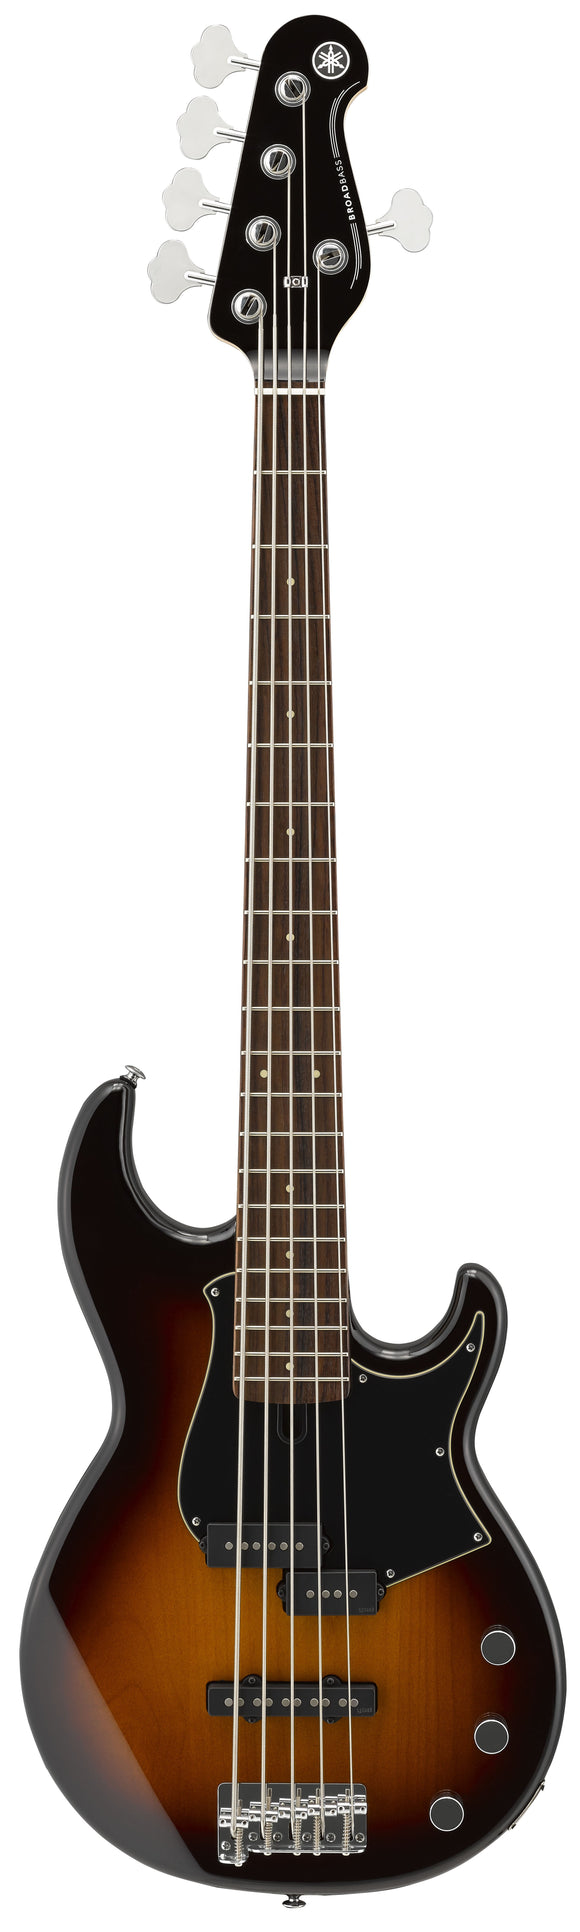 Yamaha Model BB435TBS Bass Guitar